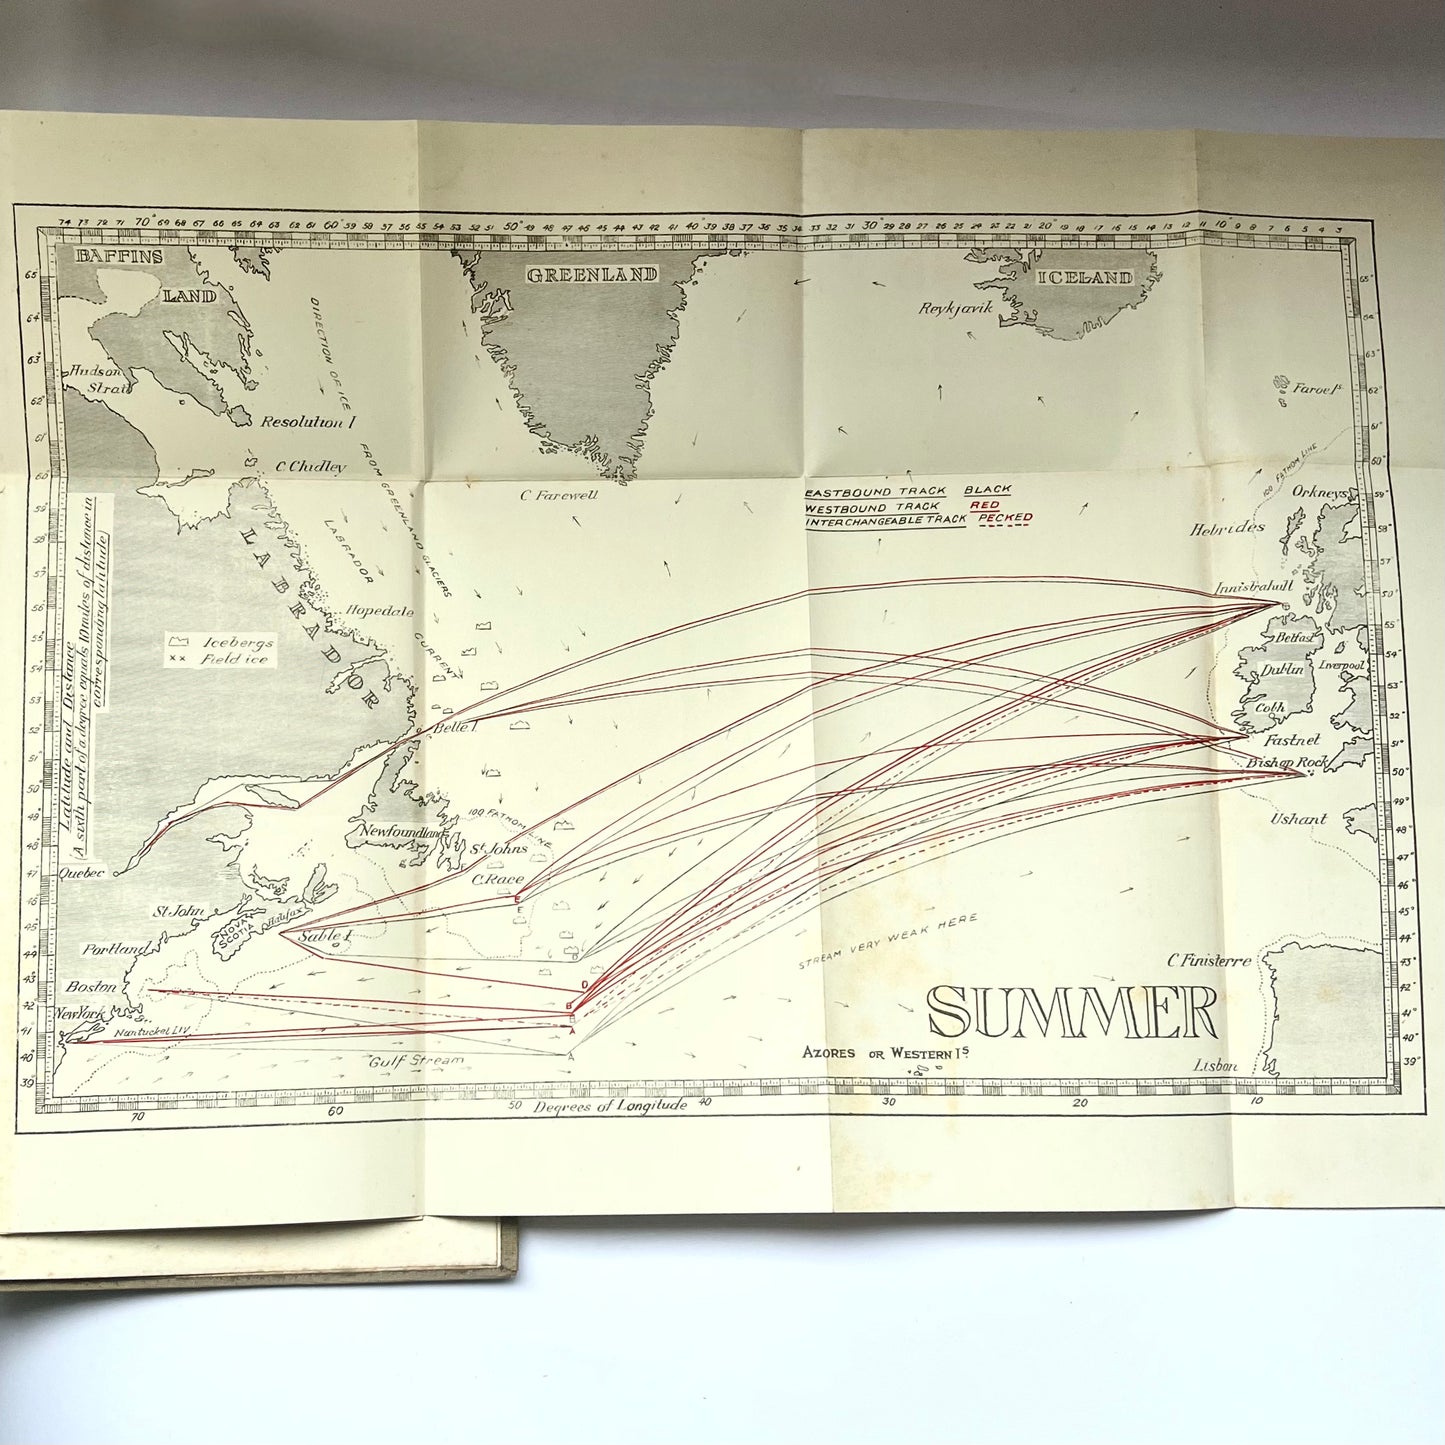 Rare presentation copy of Ship Ahoy! Nautical Notes for Ocean Travellers, hardcover, 1935